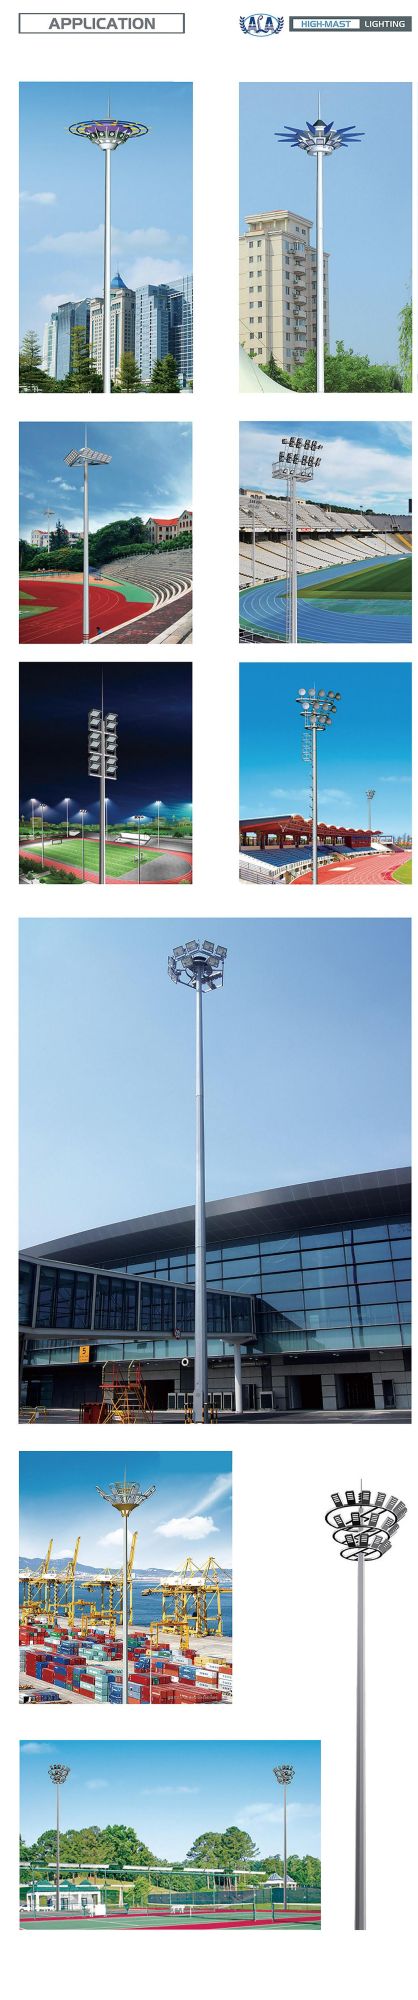 Ala 300W 400W 500W 600W 750W 950W 1200W LED High Power High Mast Pole Flood Lighting Stadium Sports Light